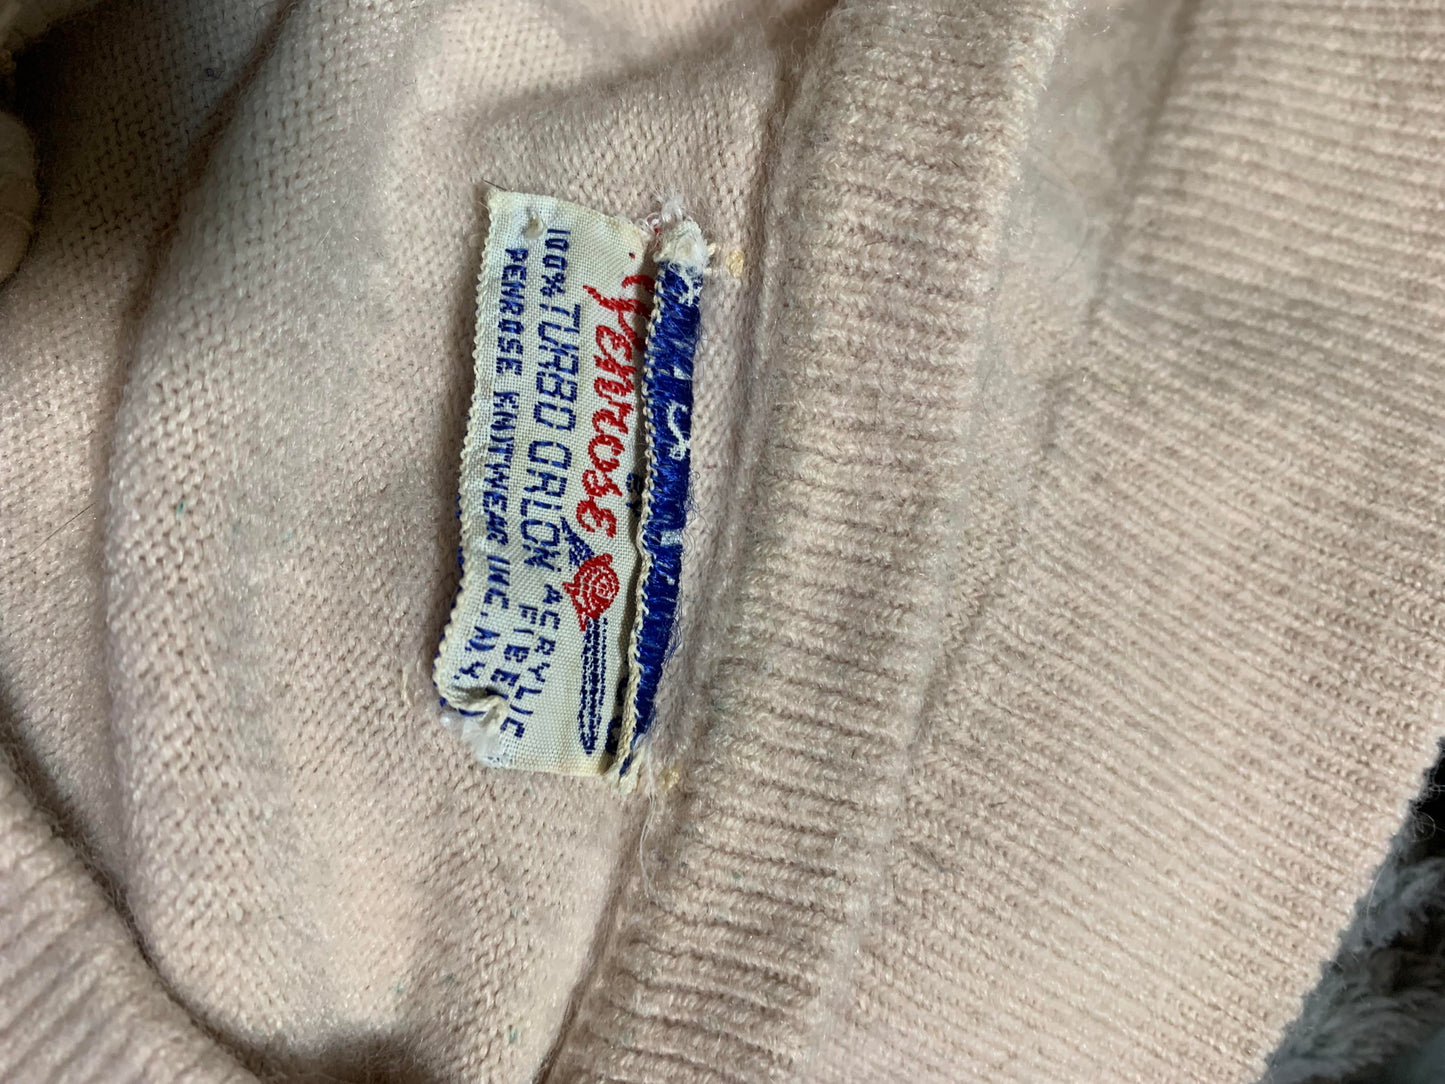 Beaded Oyster Orlon Button Down Cardigan Sweater circa 1950s